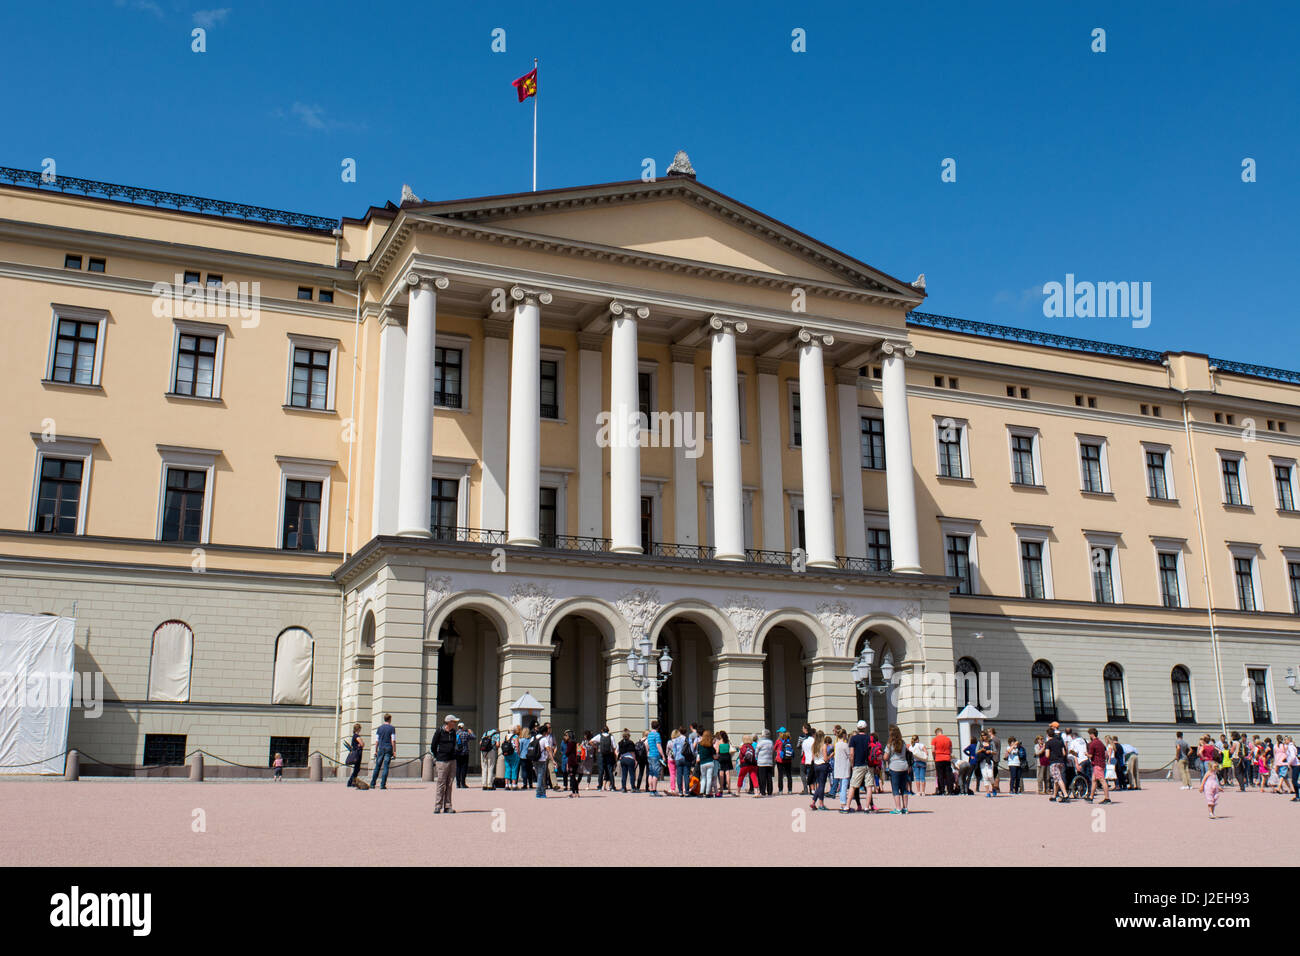 Norvegia, Oslo, Royal Palace (Det Kongelige Slott). 173 camera Royal residence, circa 1824-1848. Palace è la residenza ufficiale del monarca norvegese. Foto Stock